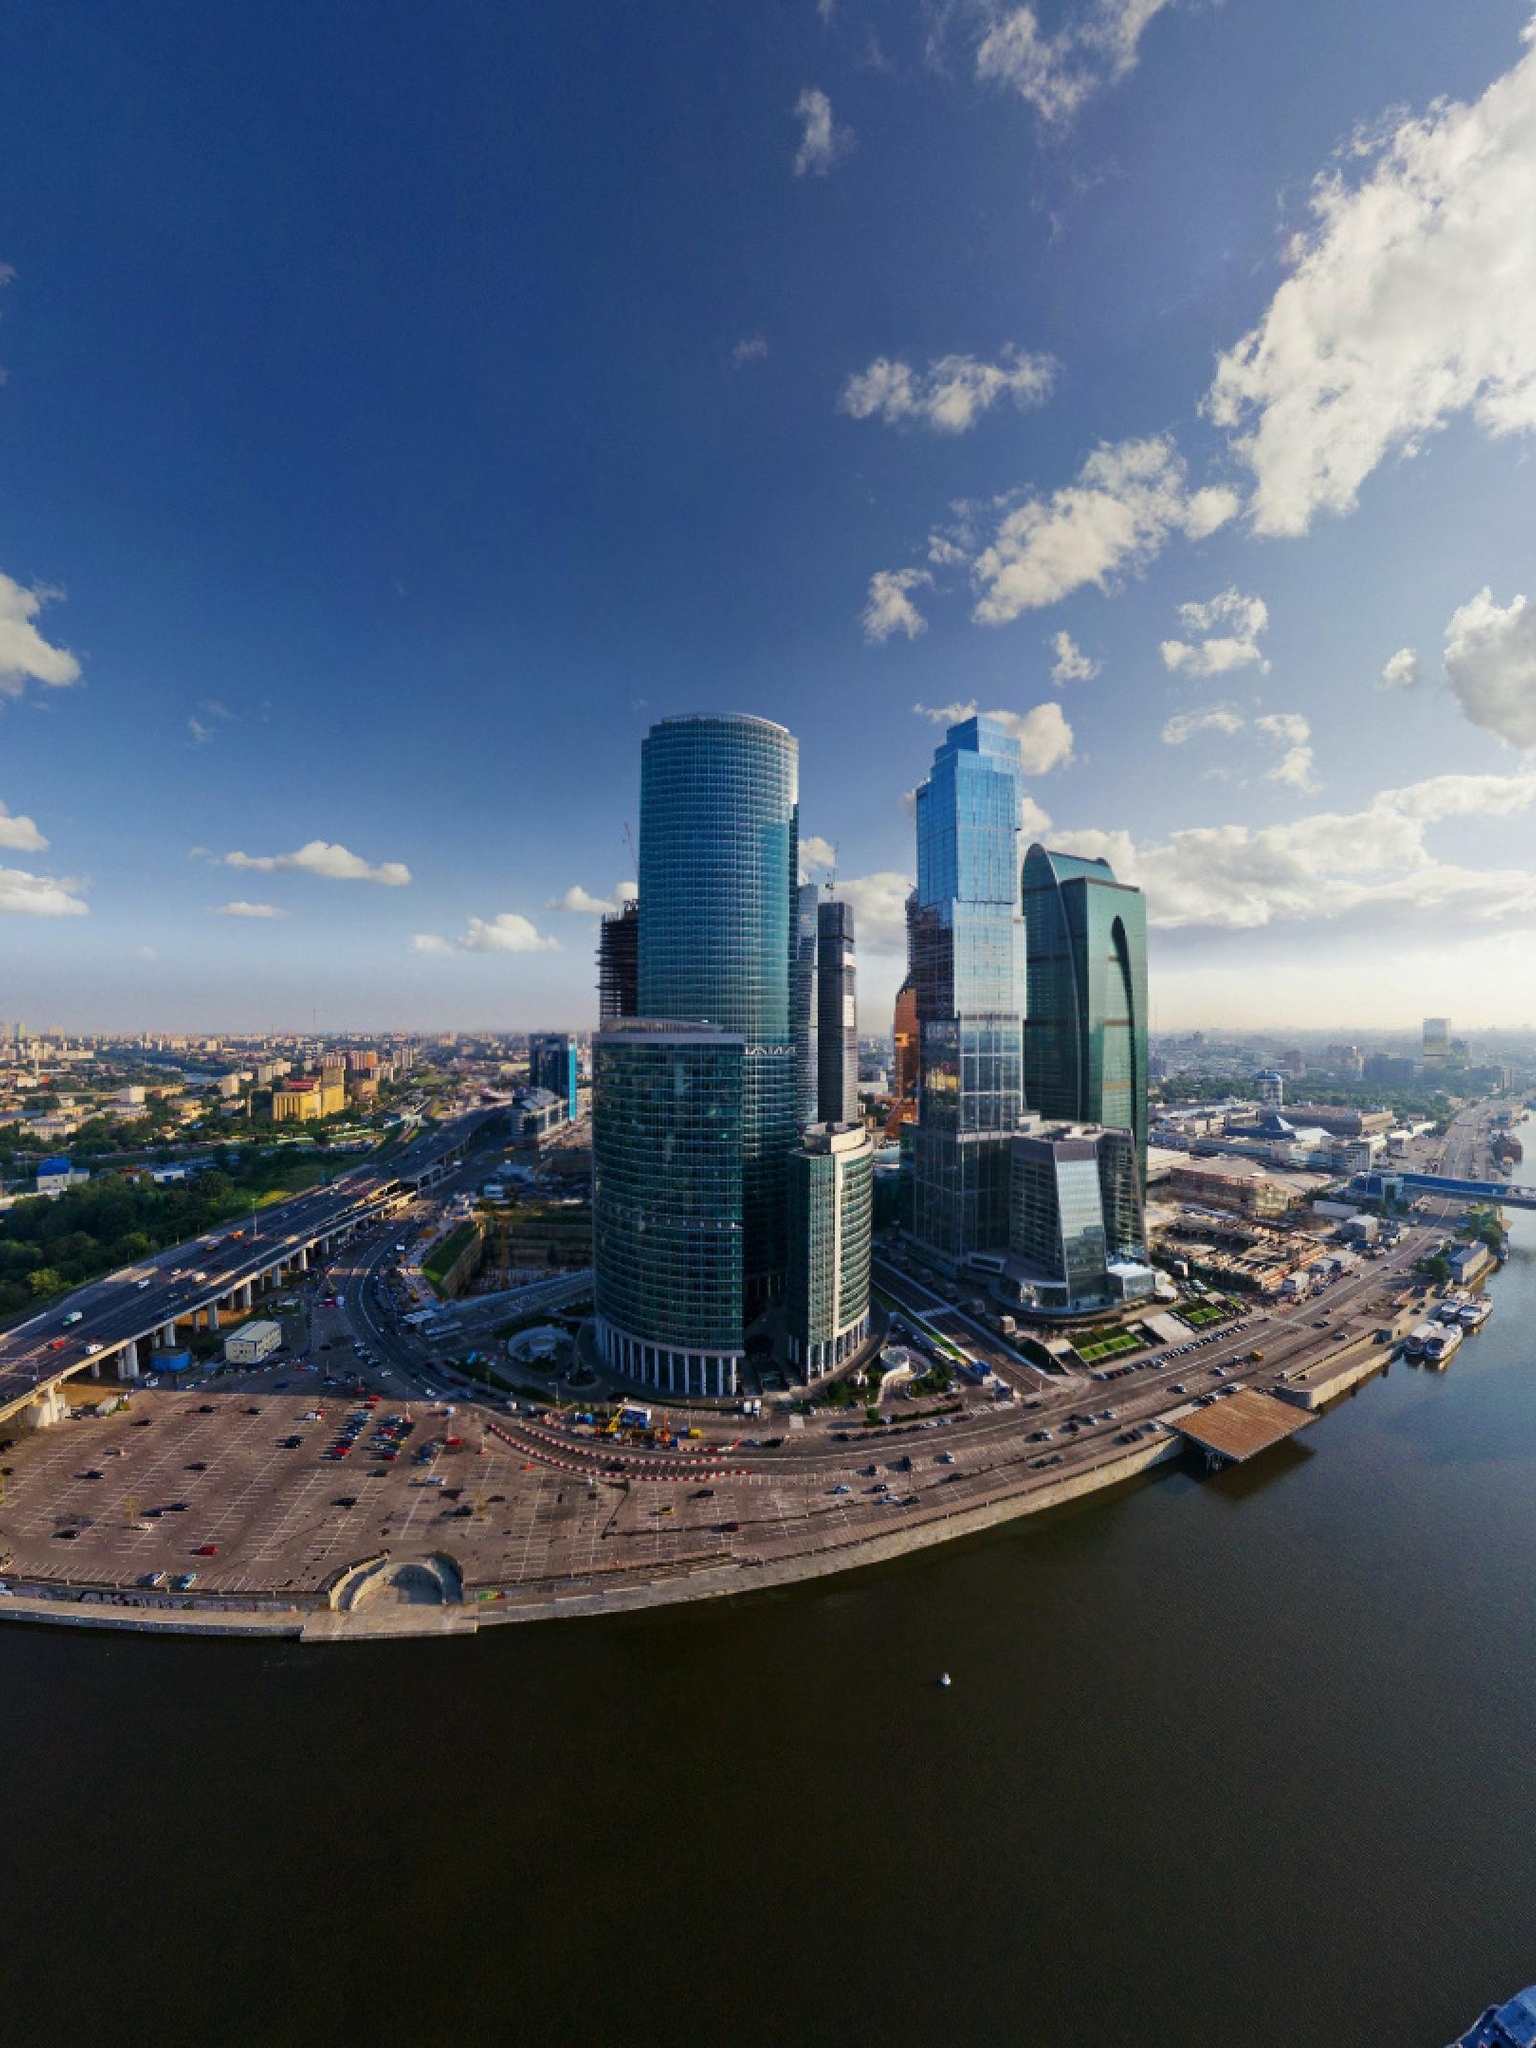 Картинка: Москва, город, центр, река, мост, здания, высотки, небо, облака, панорама